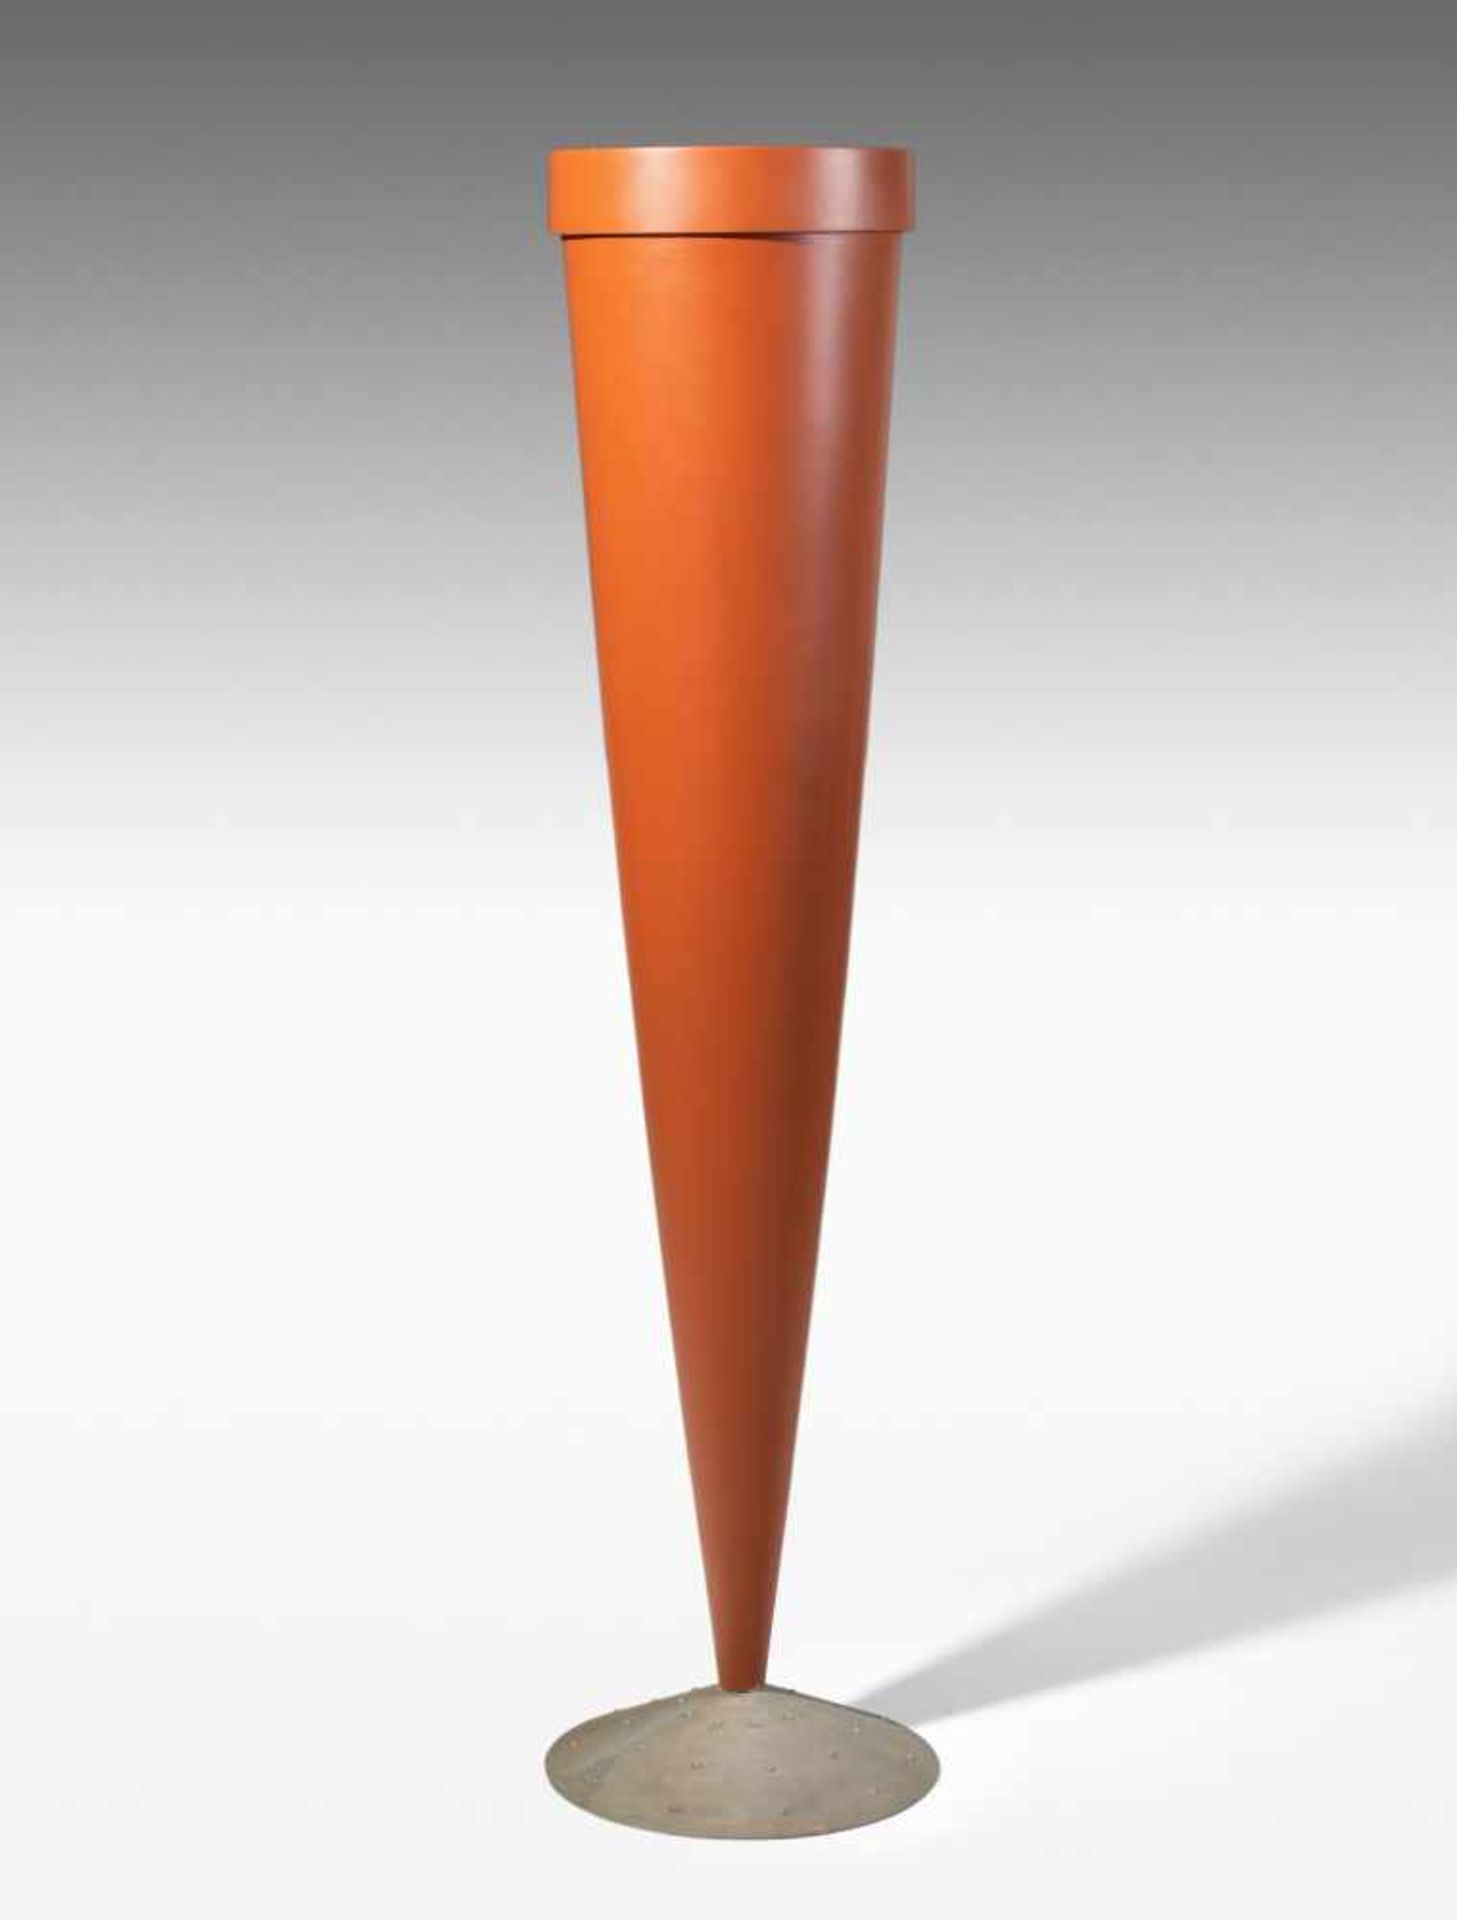 Philippe StarckVase "Popopo". Entwurf 1993. Fuss Metall, Kelch aus ziegelrot bemaltem Polyester. H